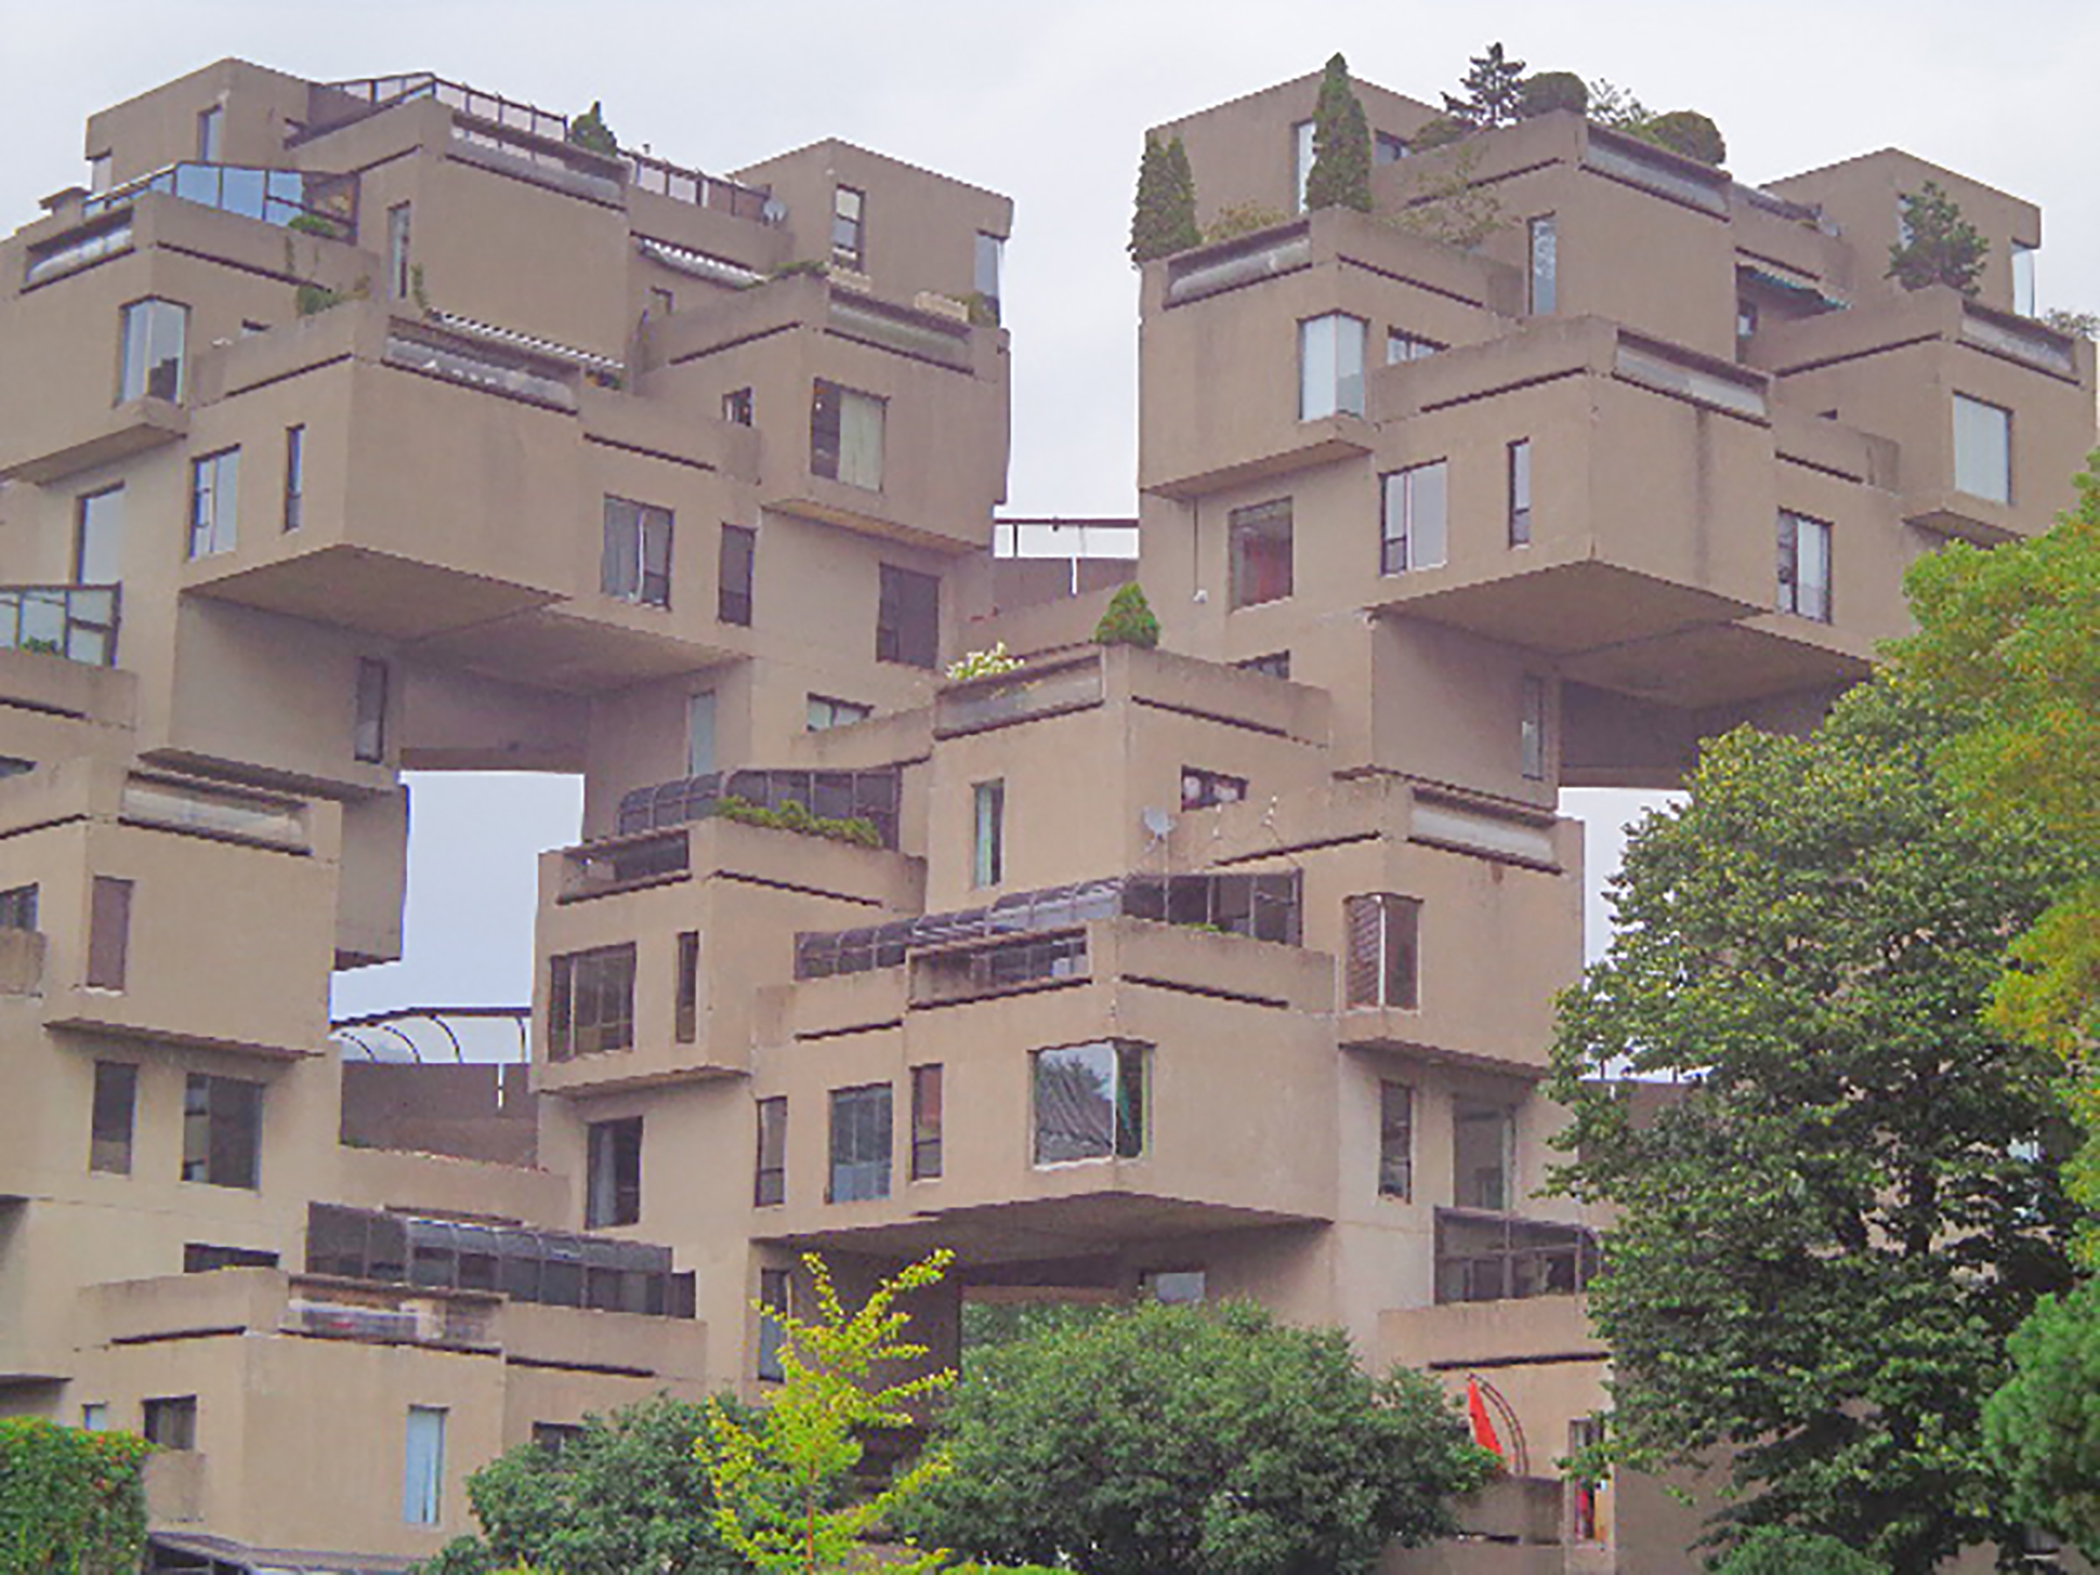 Habitat '67 Housing, Montreal